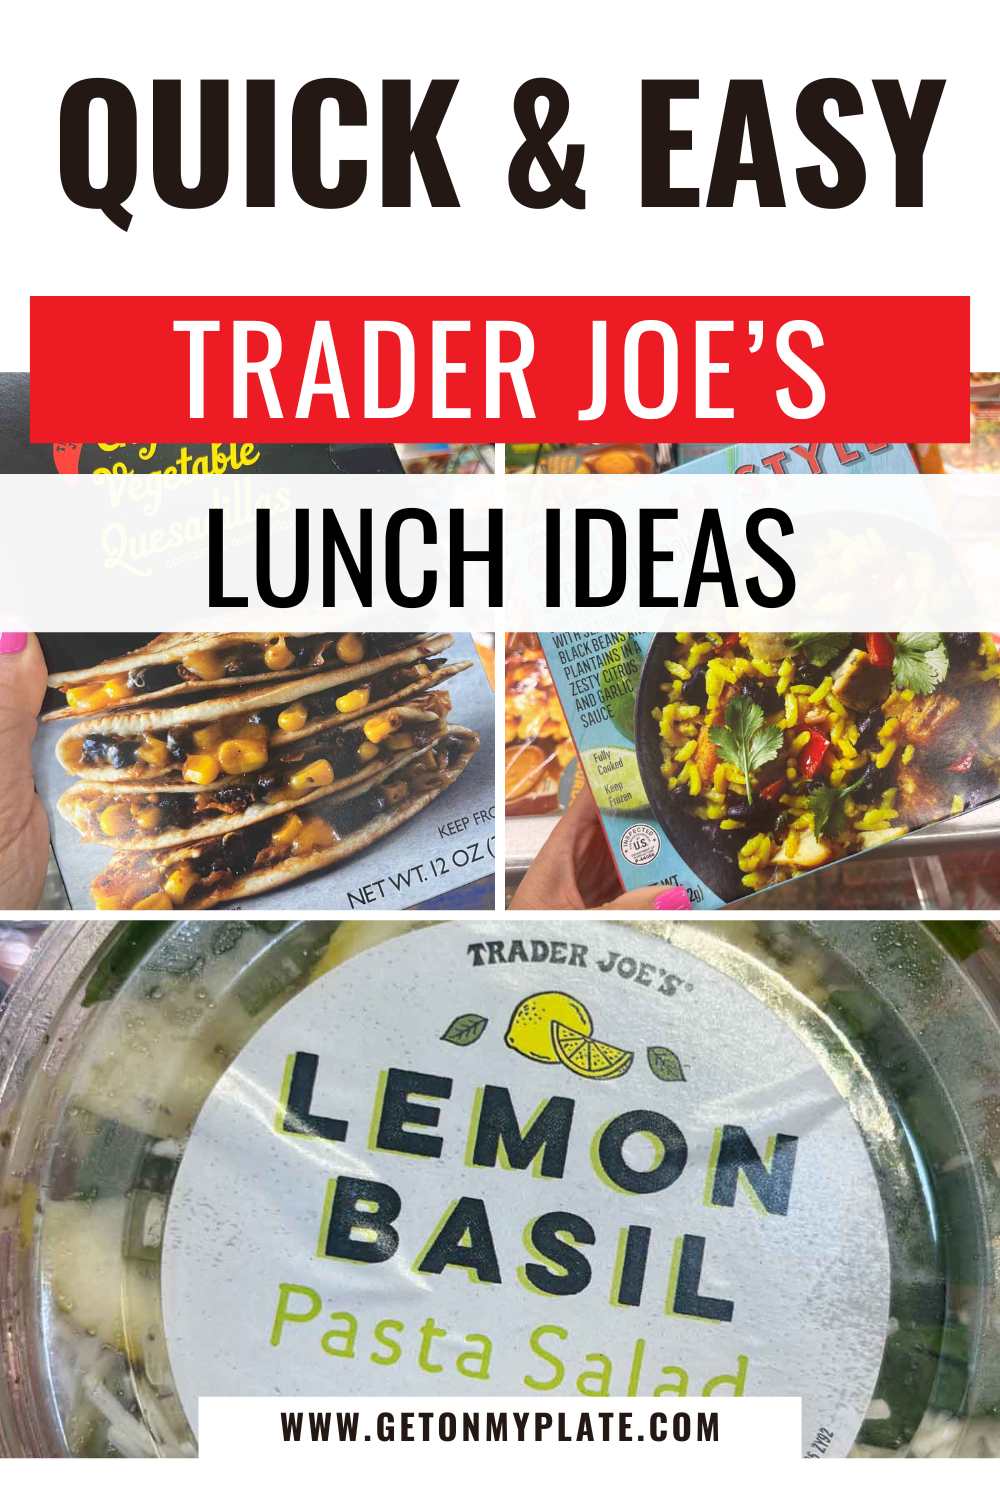 Pinterest Pin for Trader Joe's Lunch ideas.